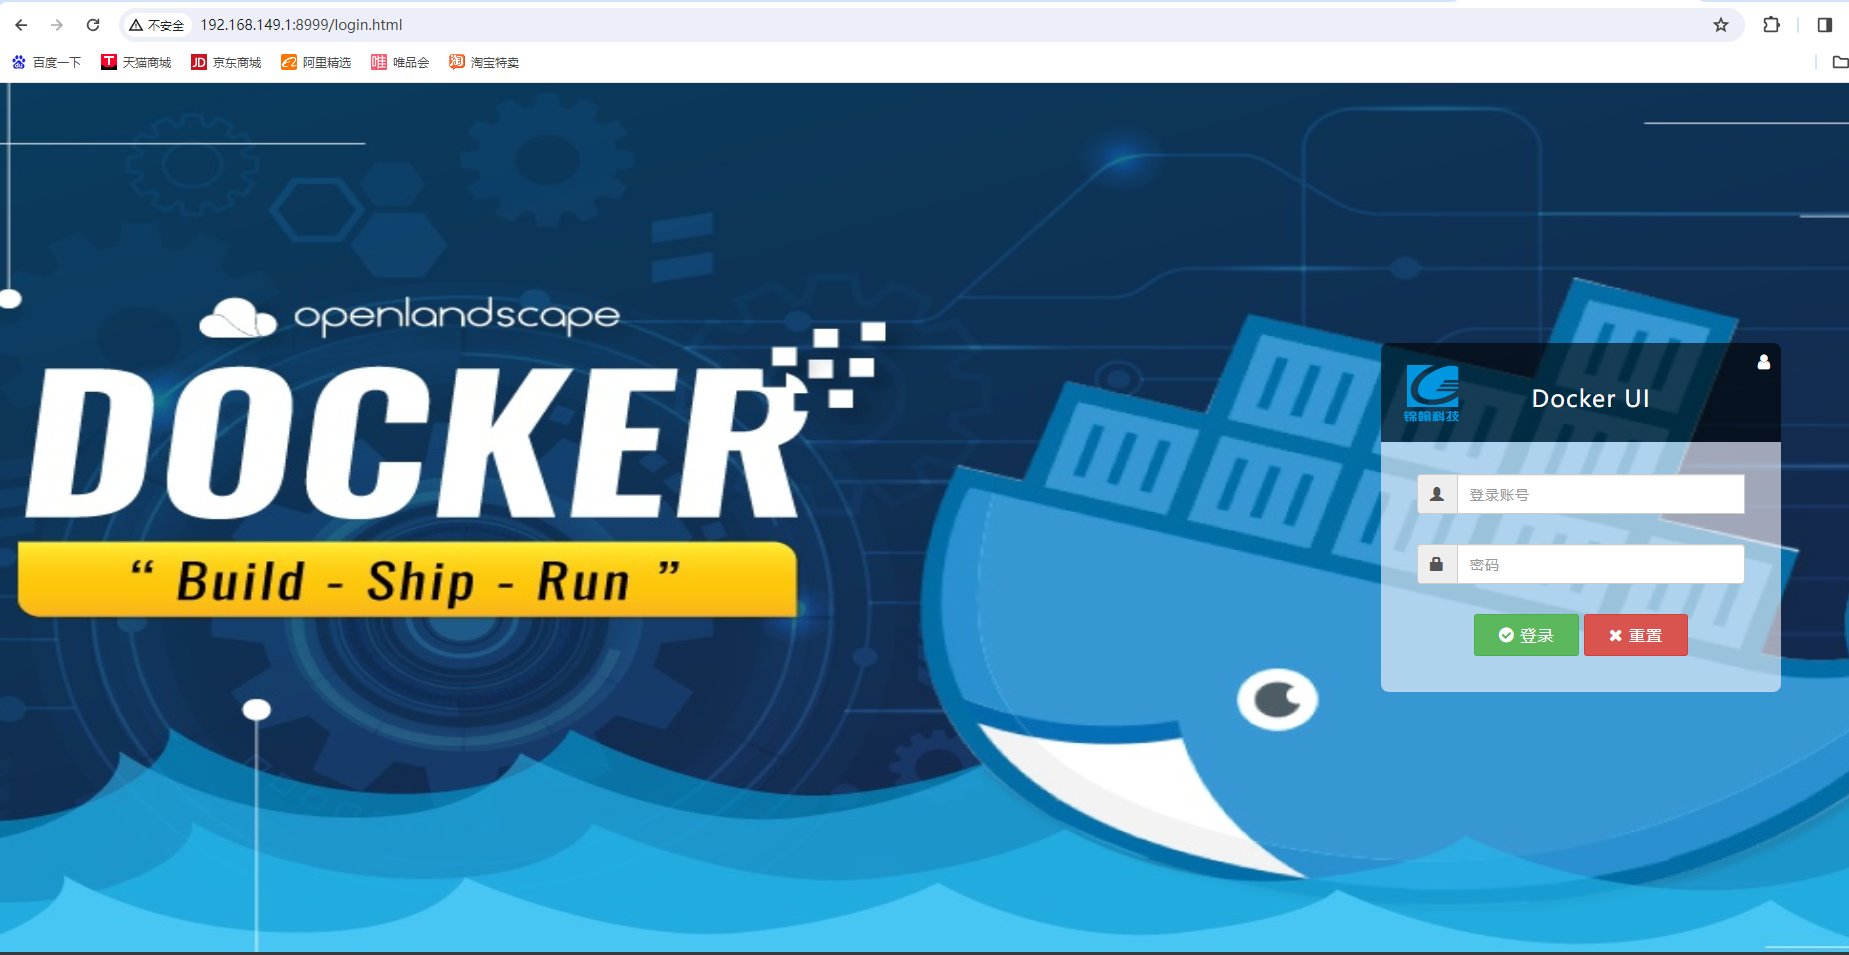 Docker容器的可视化管理工具—DockerUI本地部署与远程访问,e1fab2617ba98420aa51714185761d2,第2张